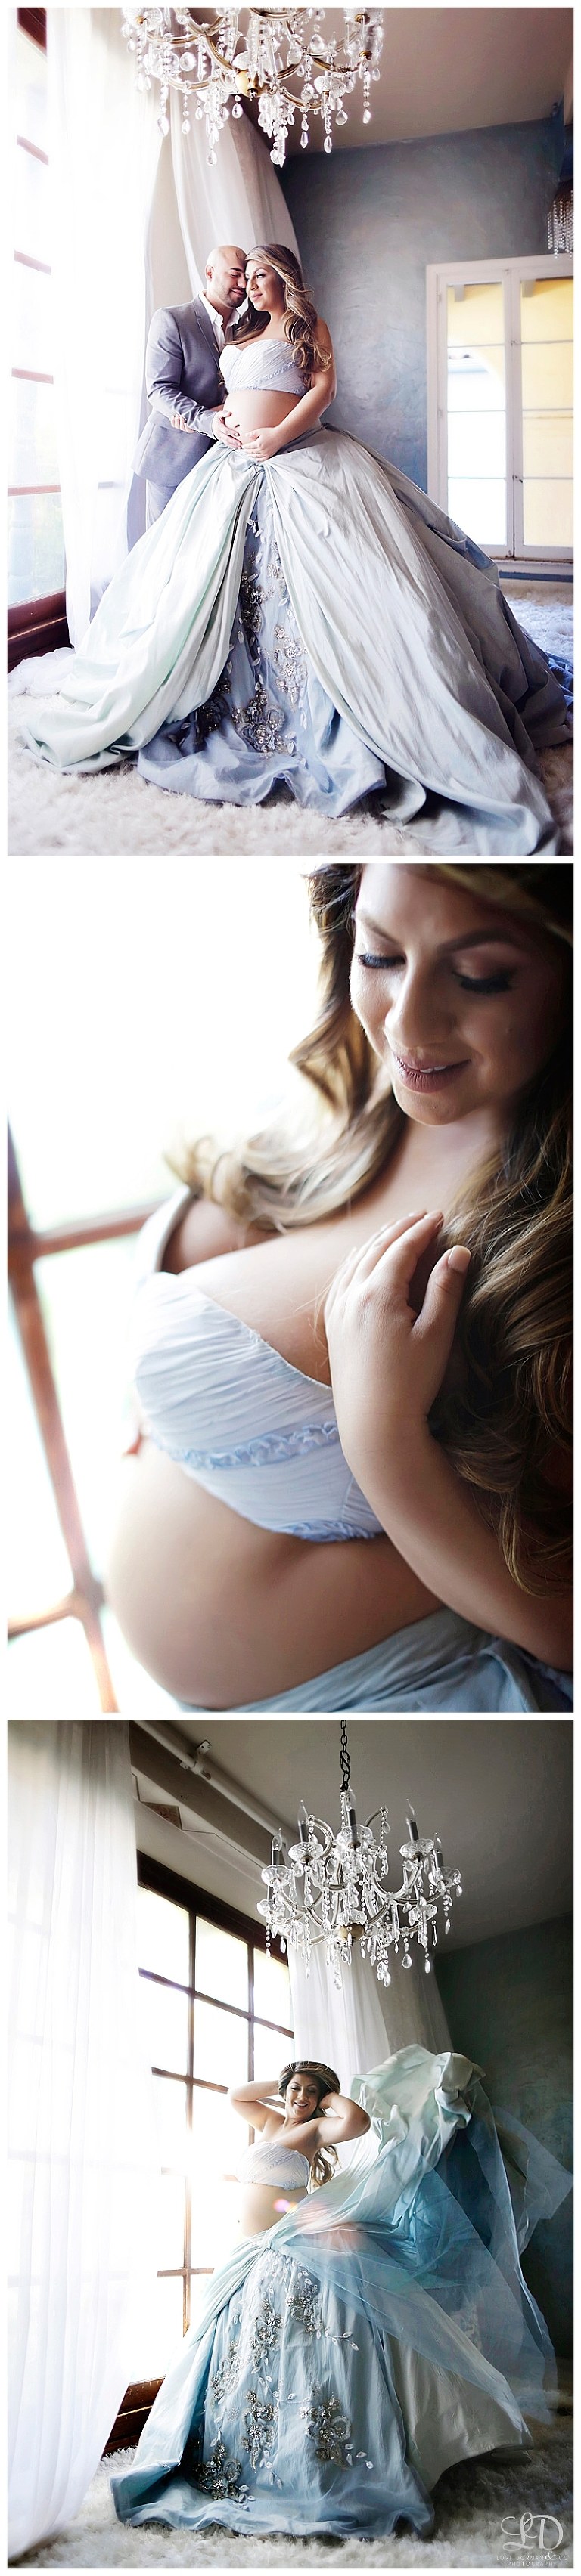 sweet maternity photoshoot-lori dorman photography-maternity boudoir-professional photographer_5307.jpg